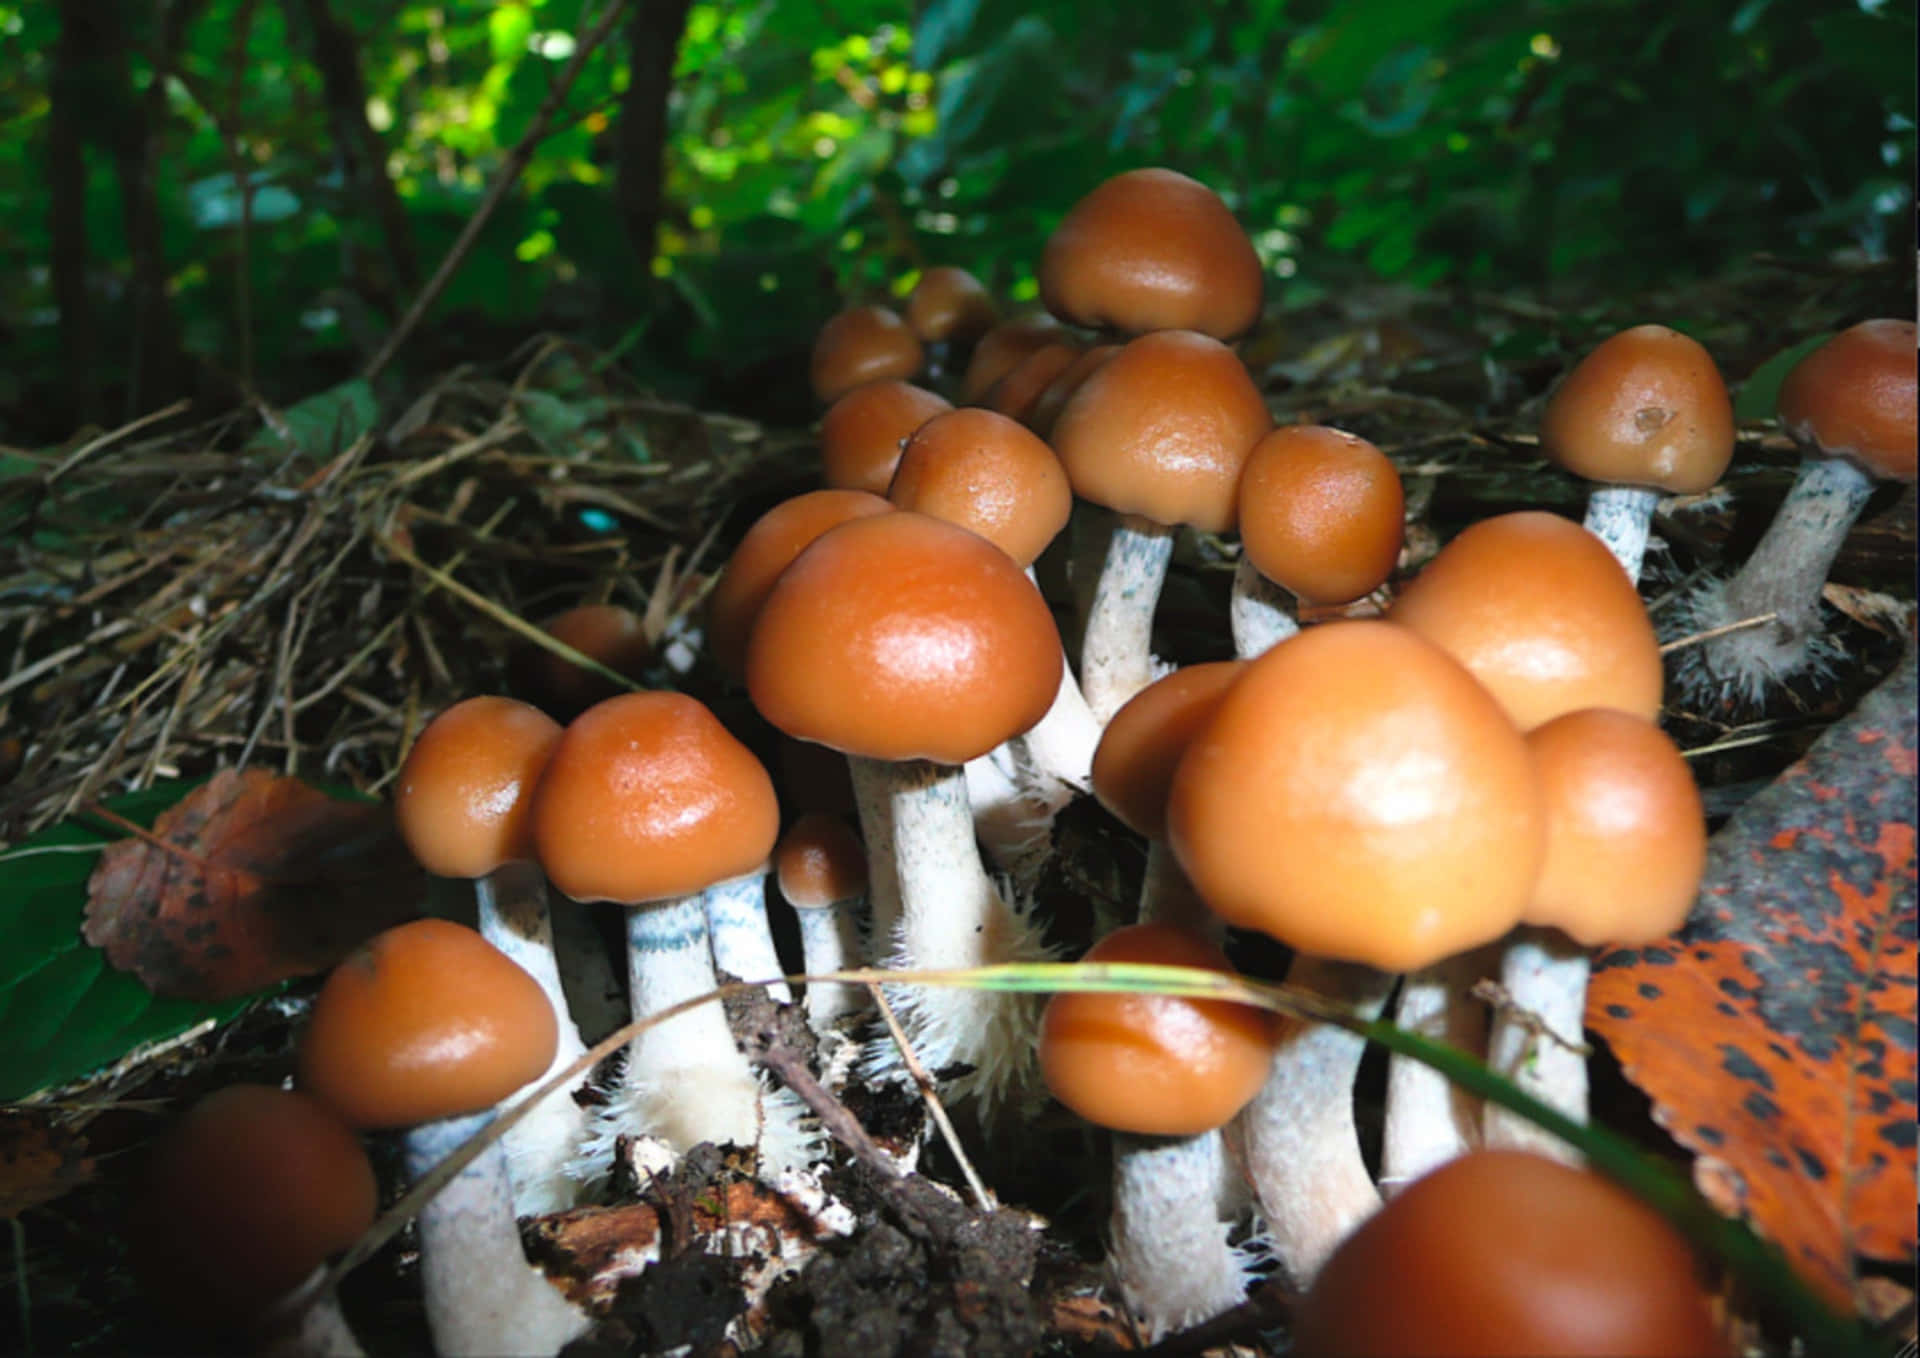 "A beautiful collection of vibrant magic mushrooms."